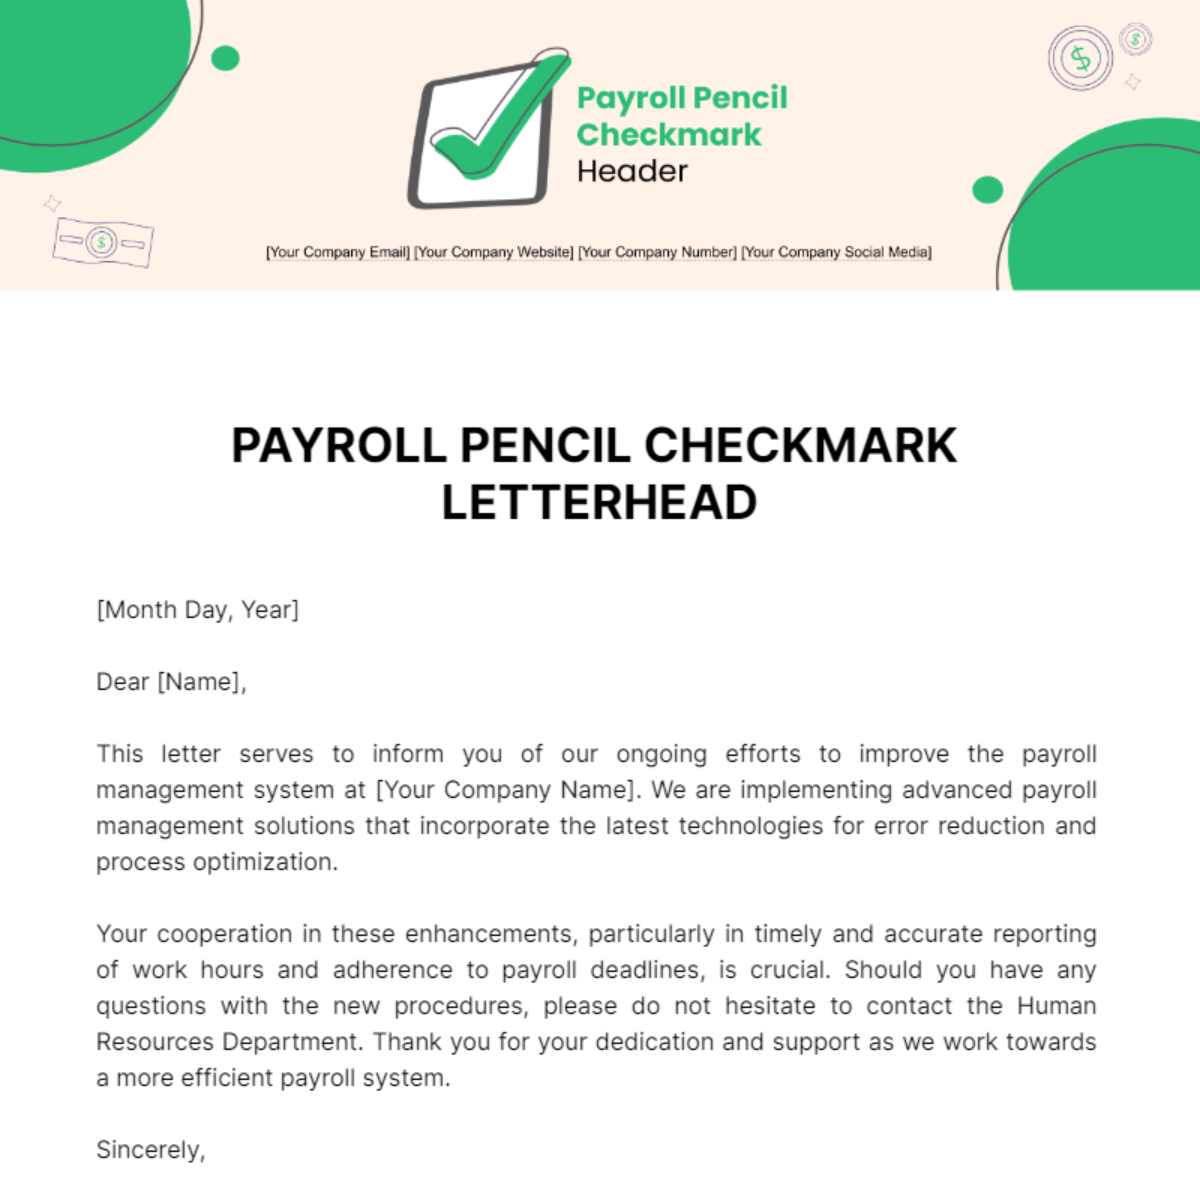 Free Payroll Pencil Checkmark Letterhead Template